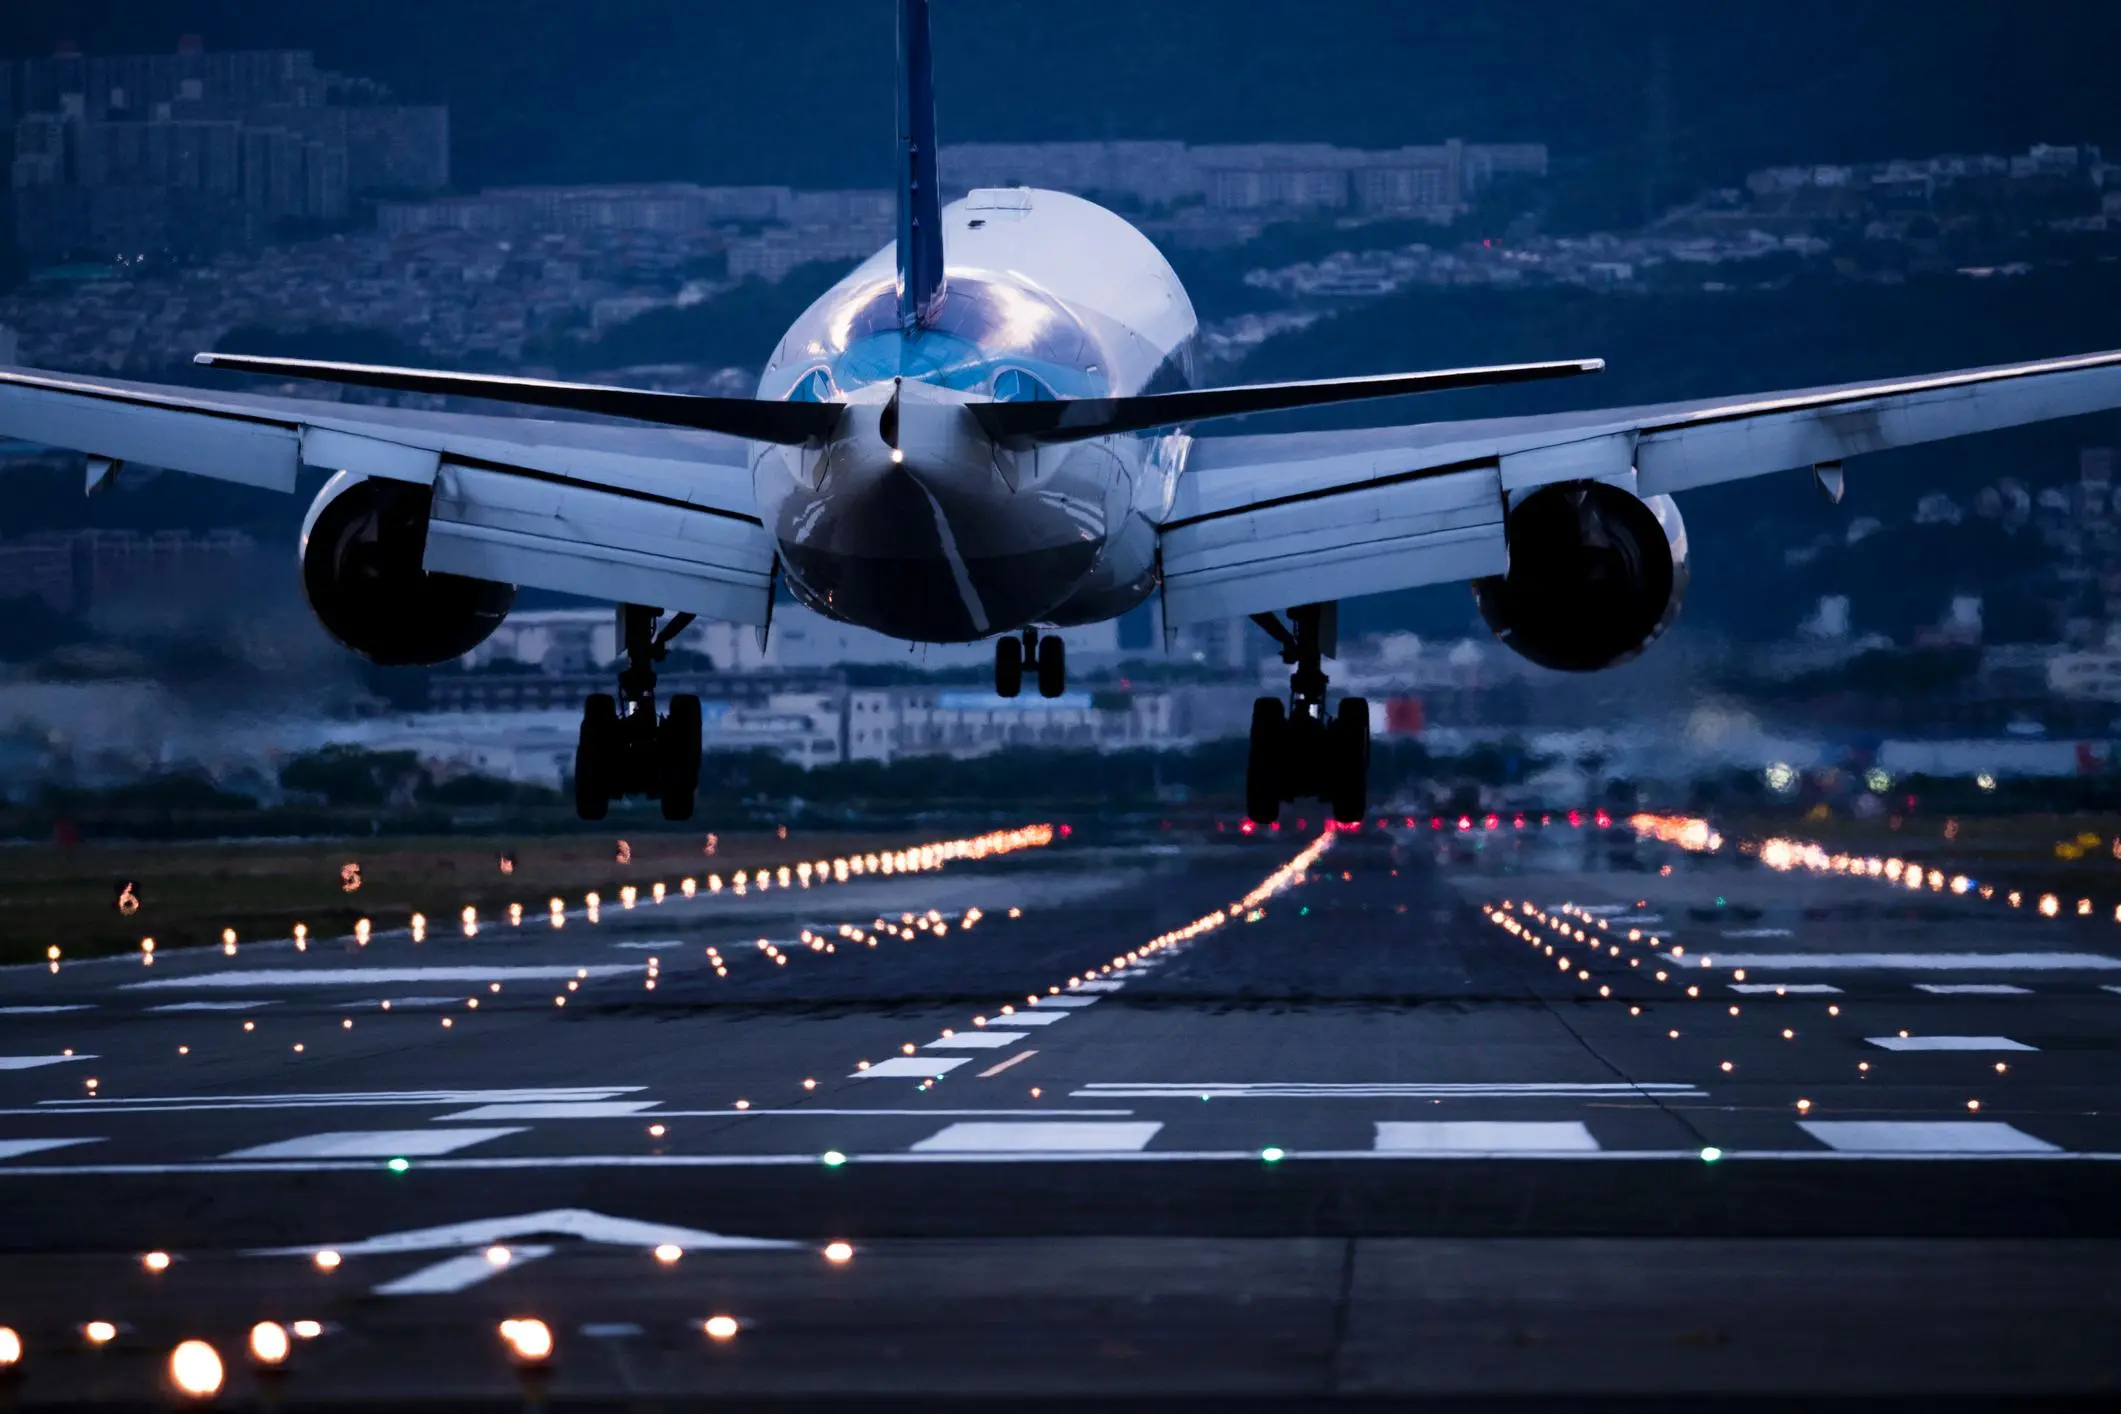 airplane taking off at night wallpaper